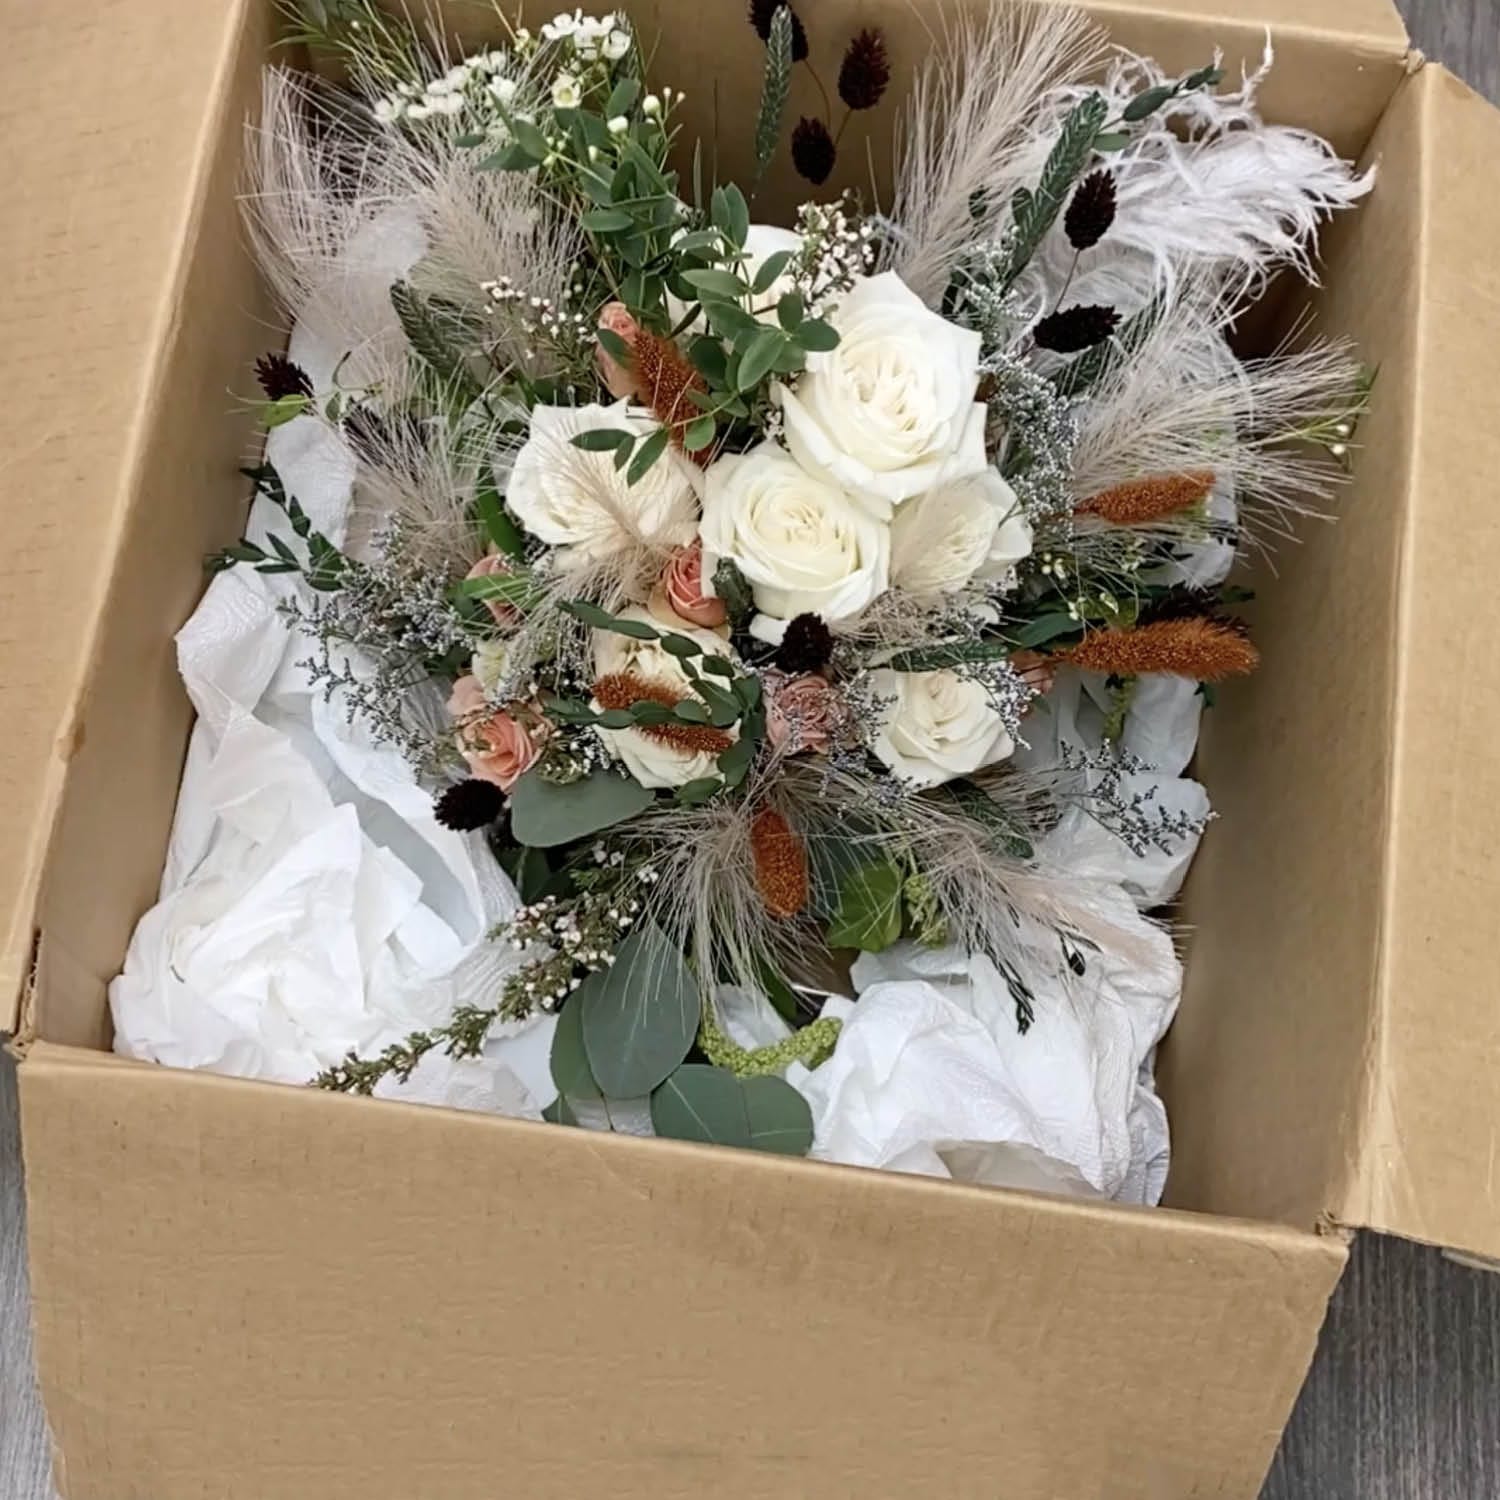 Flowers in box preparing to ship - DBAndrea